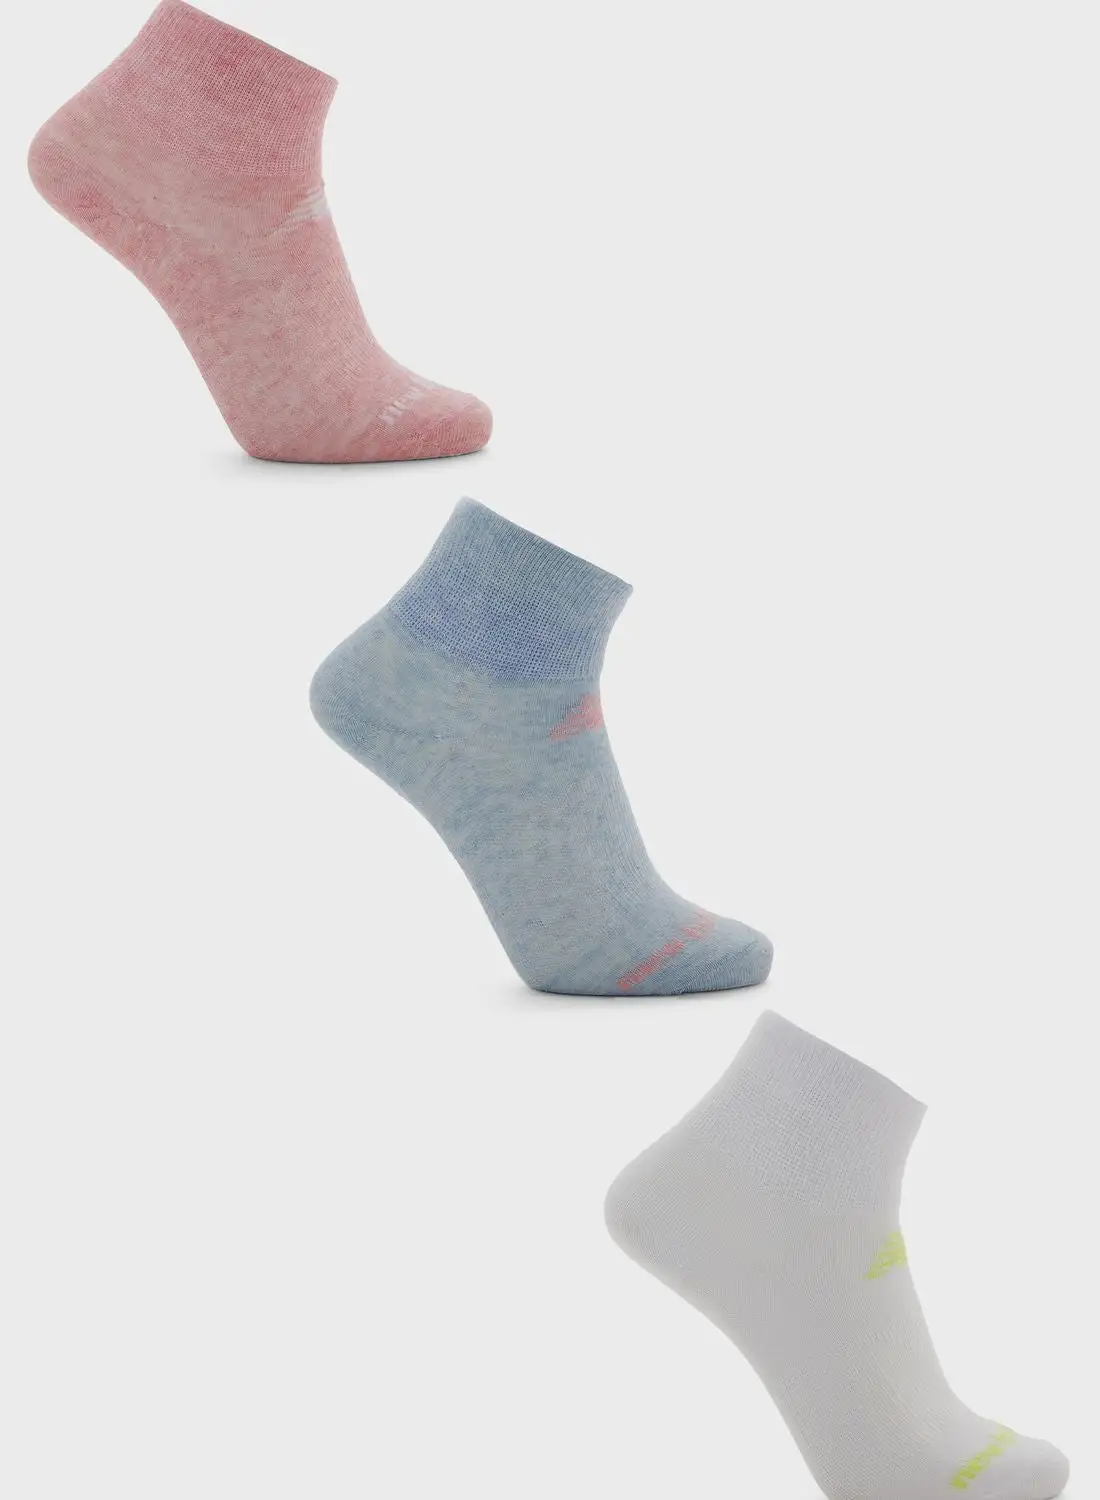 New Balance Performance Flat Knit Ankle Socks